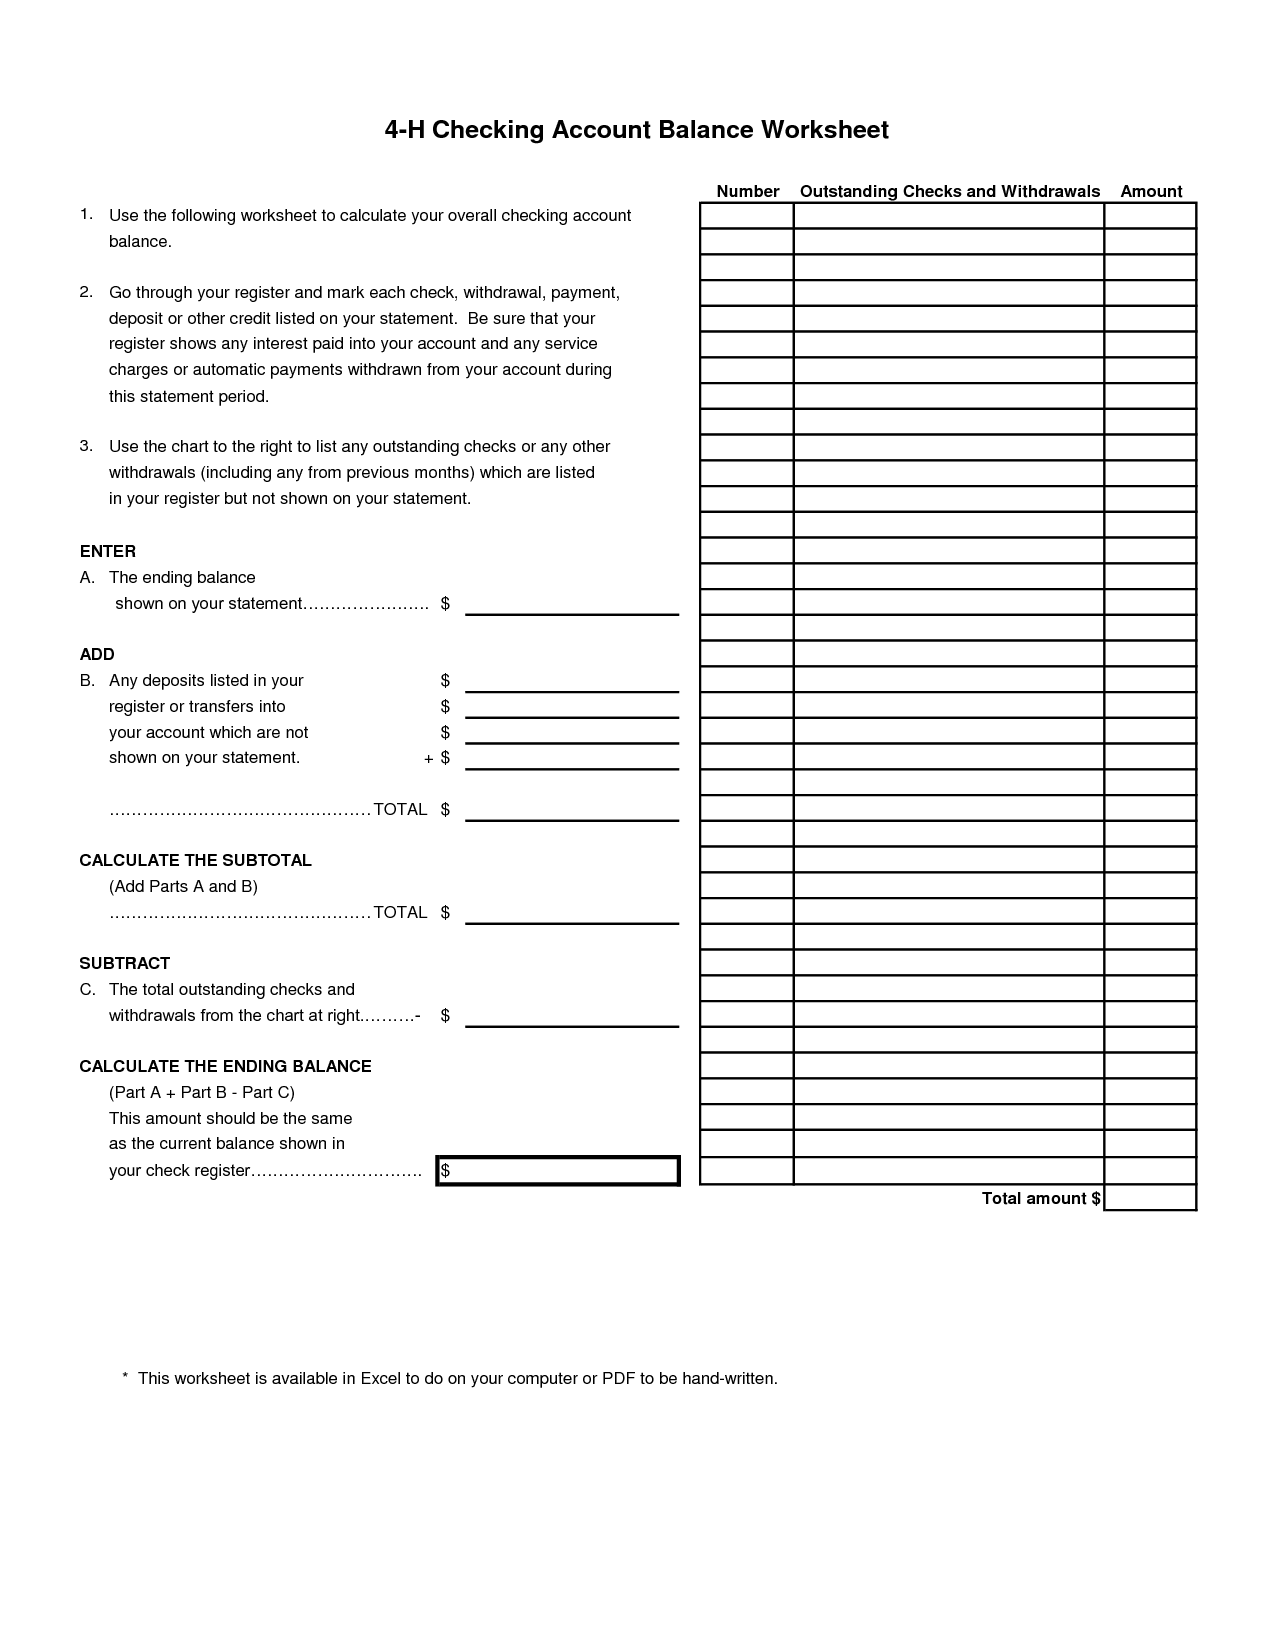 Checks And Balances Worksheet Answers